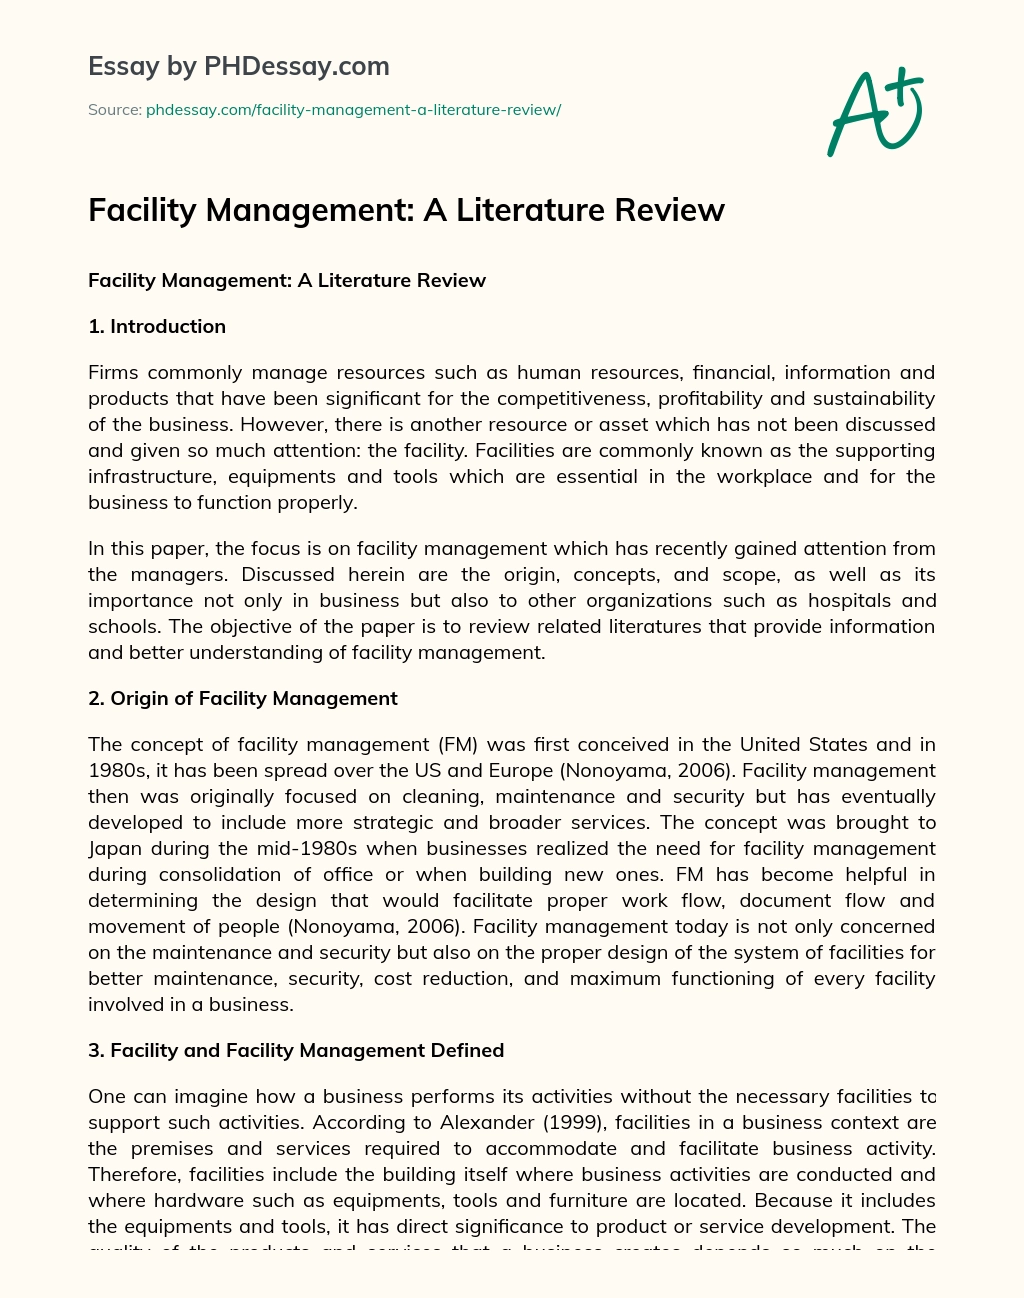 Facility Management: A Literature Review essay